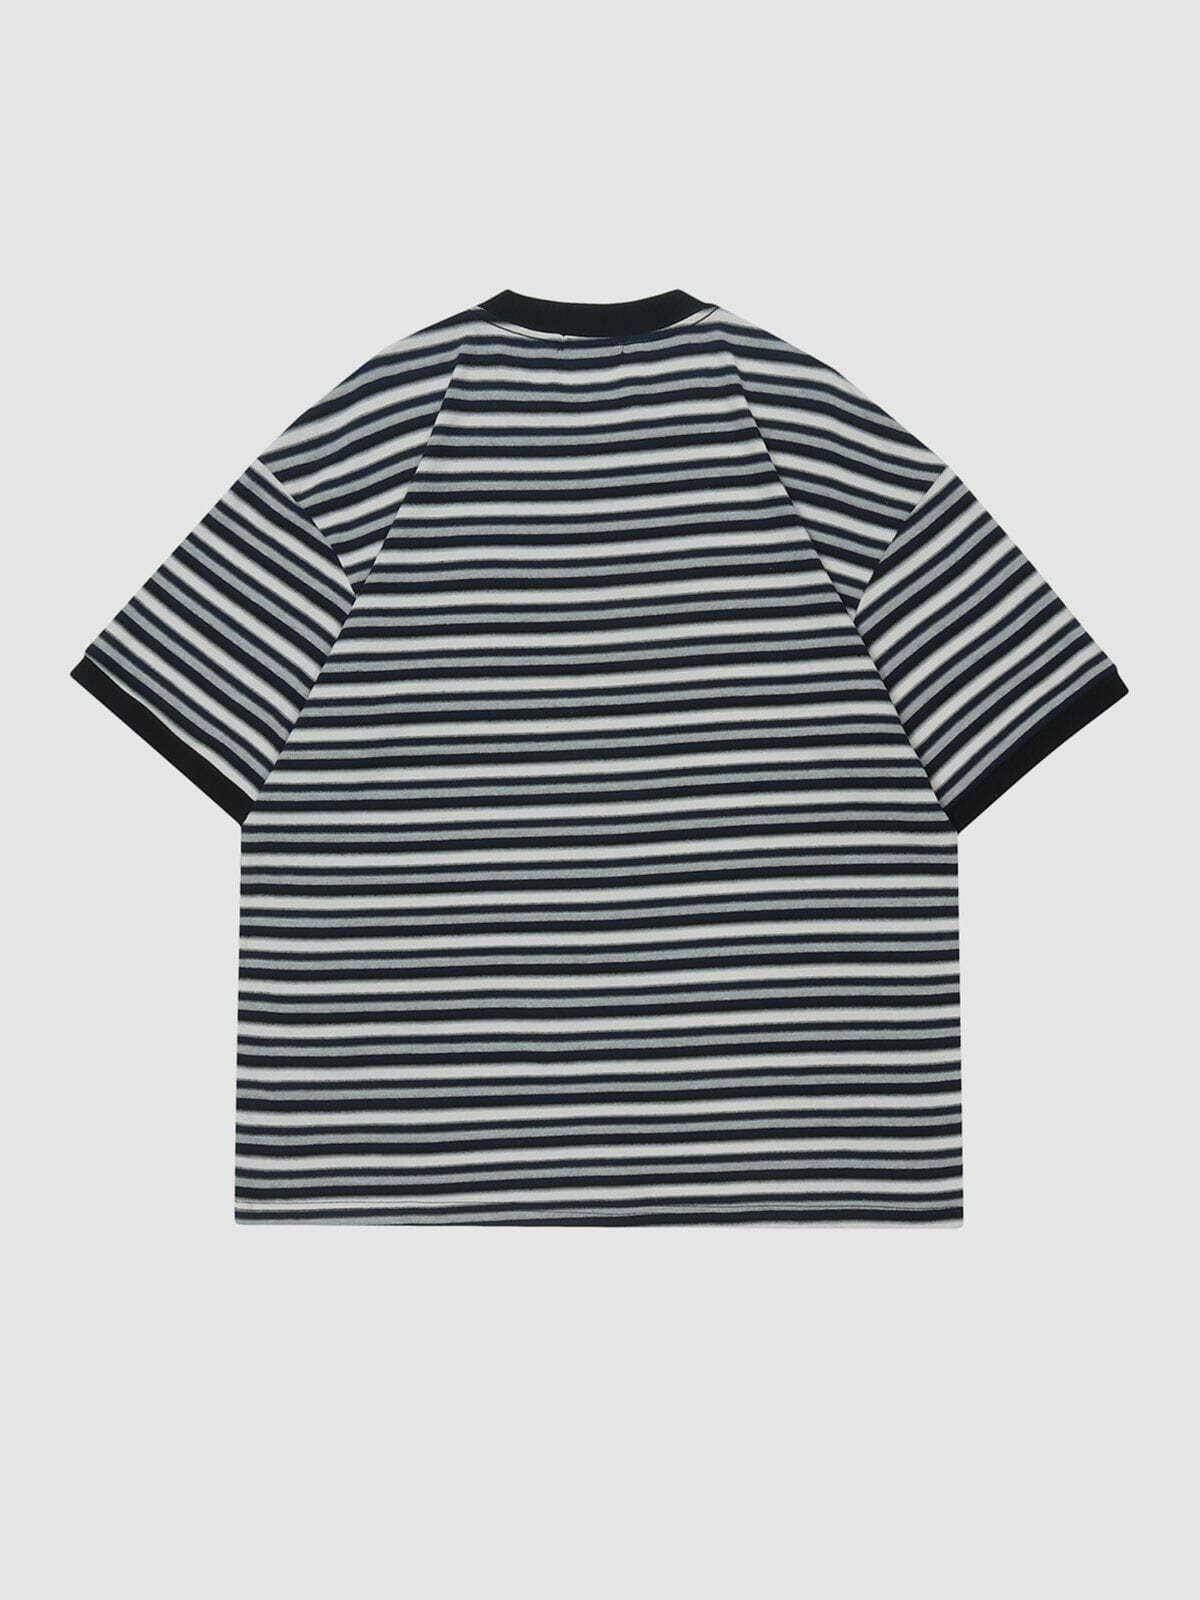 vibrant striped tee retro streetwear essential 3903